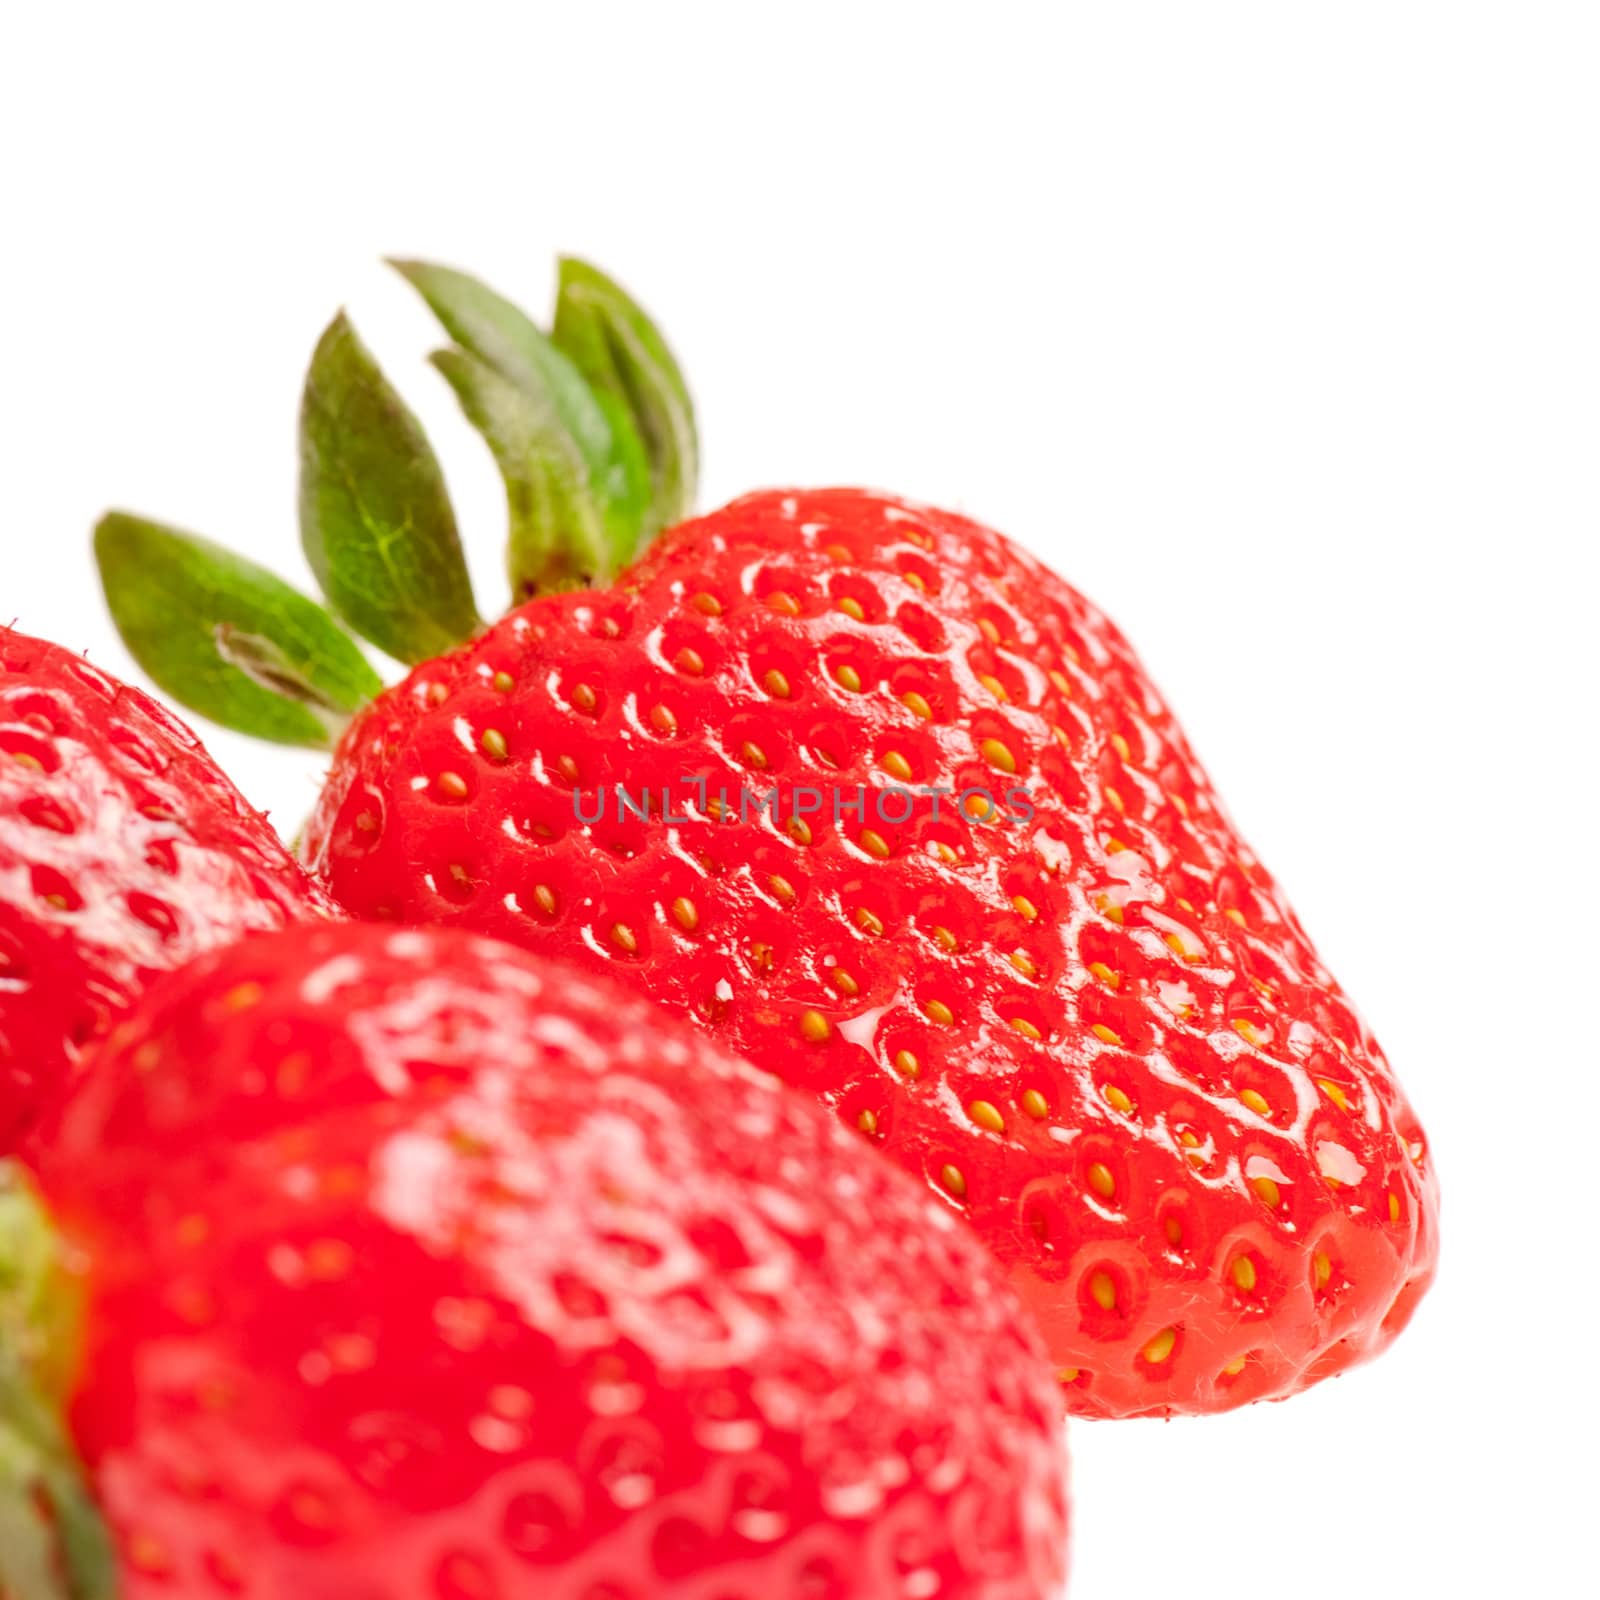 Strawberries by petr_malyshev